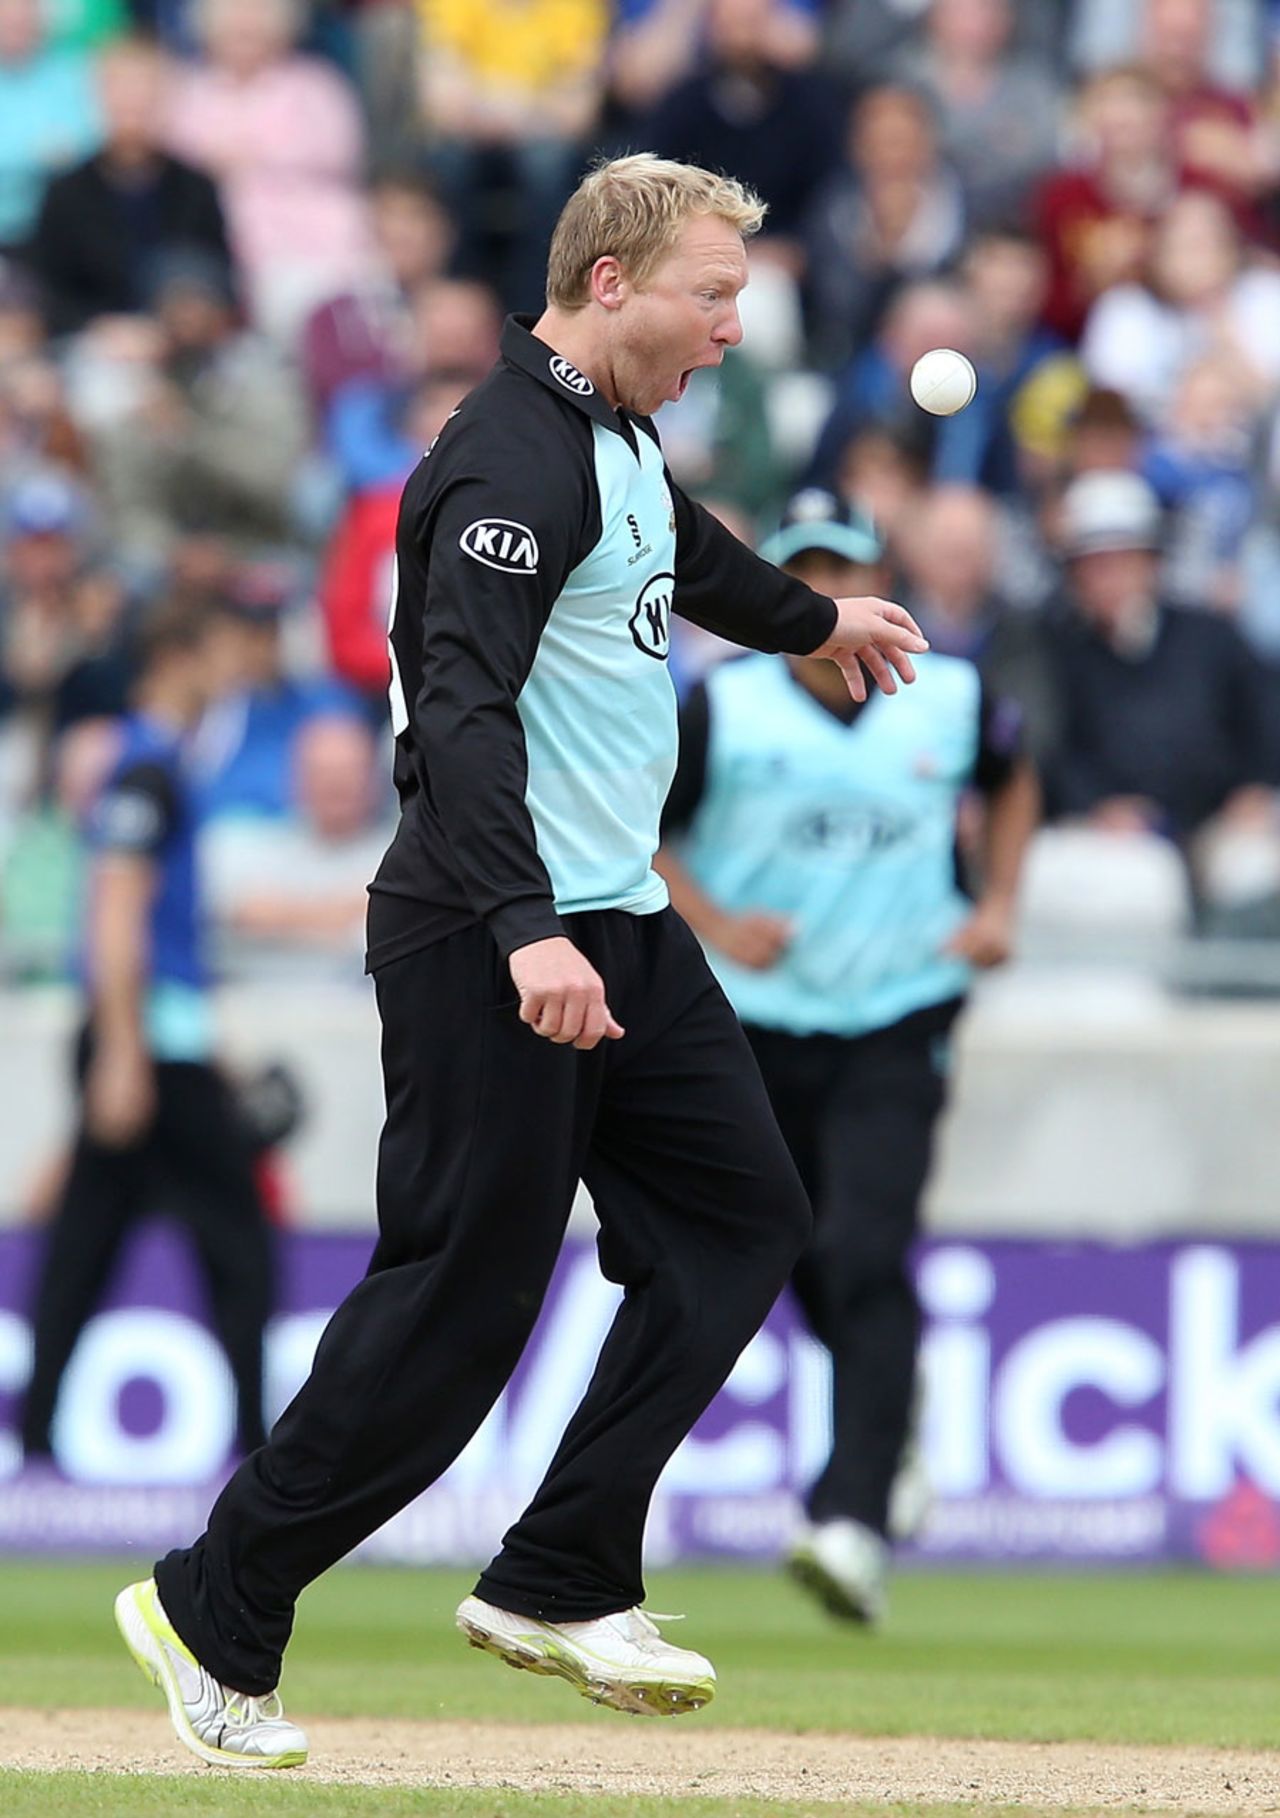 Gareth Batty was Surrey's most successful bowler, Surrey v Birmingham, NatWest T20 Blast semi-final, Edgbaston, August 23, 2014